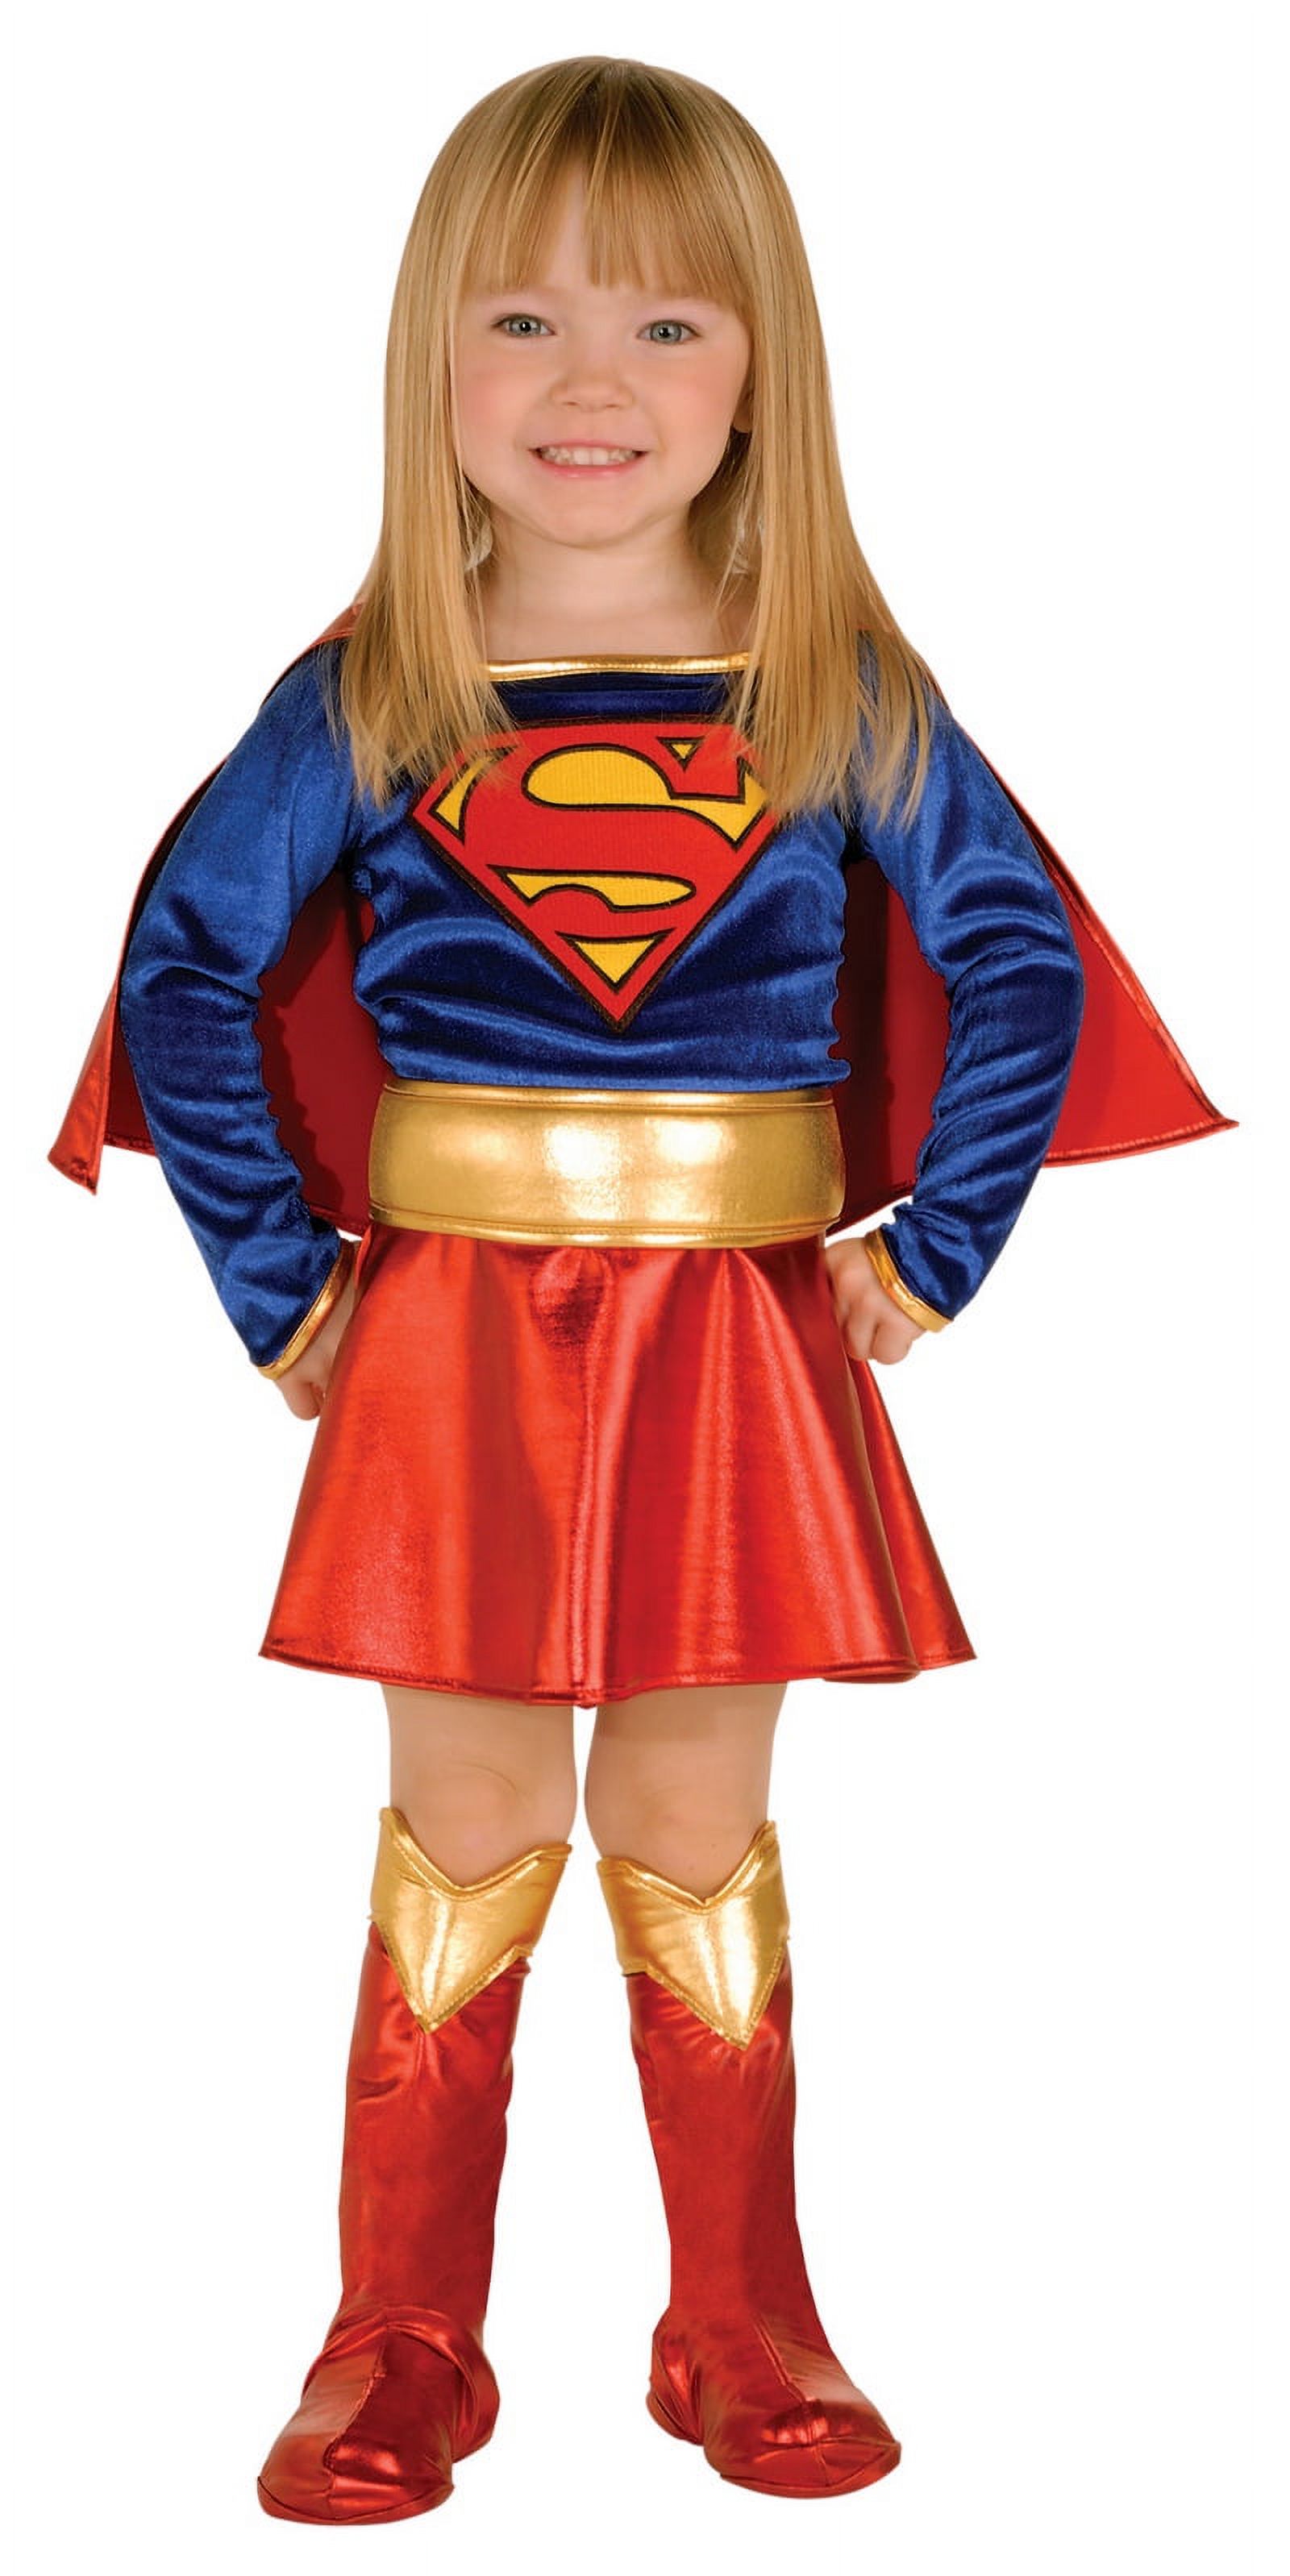 Child's Supergirl Costume - image 1 of 3